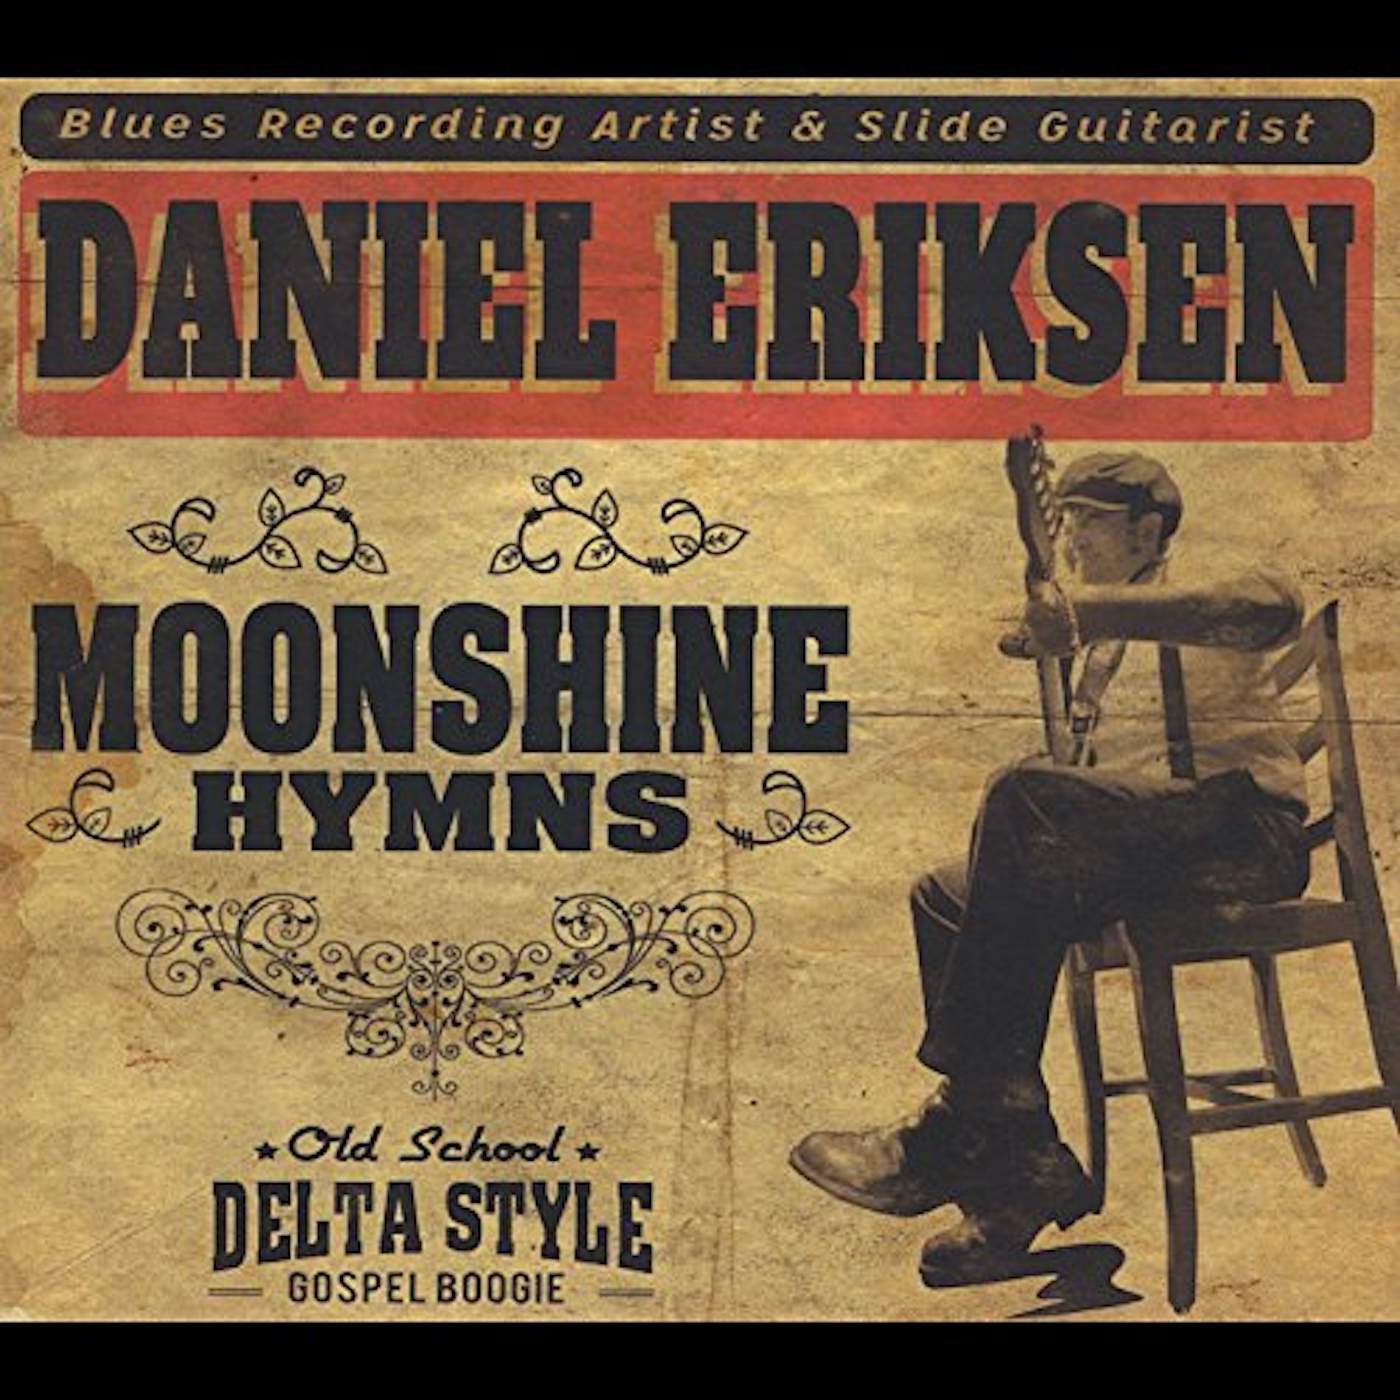 Daniel Eriksen Moonshine Hymns Vinyl Record